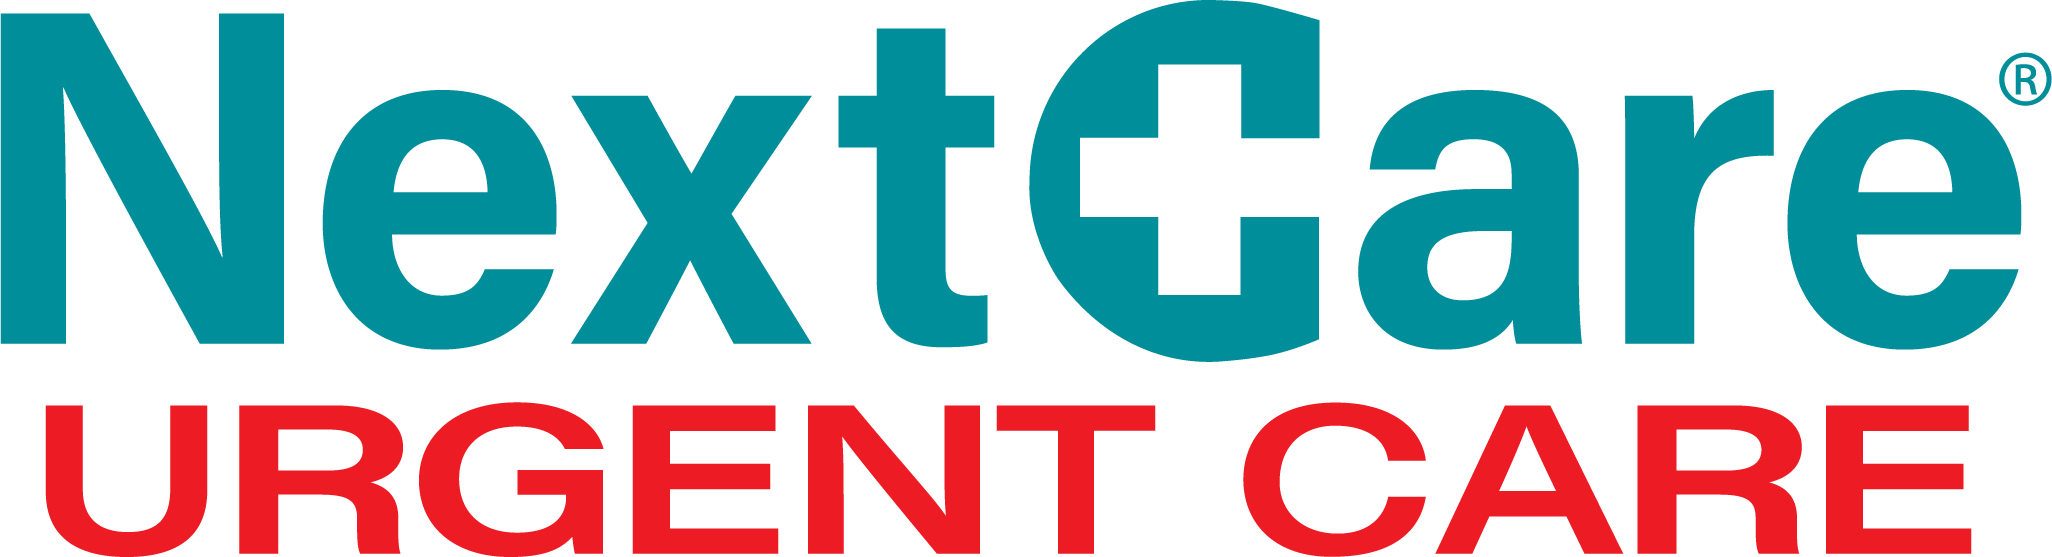 NextCare Urgent Care - Swan Logo